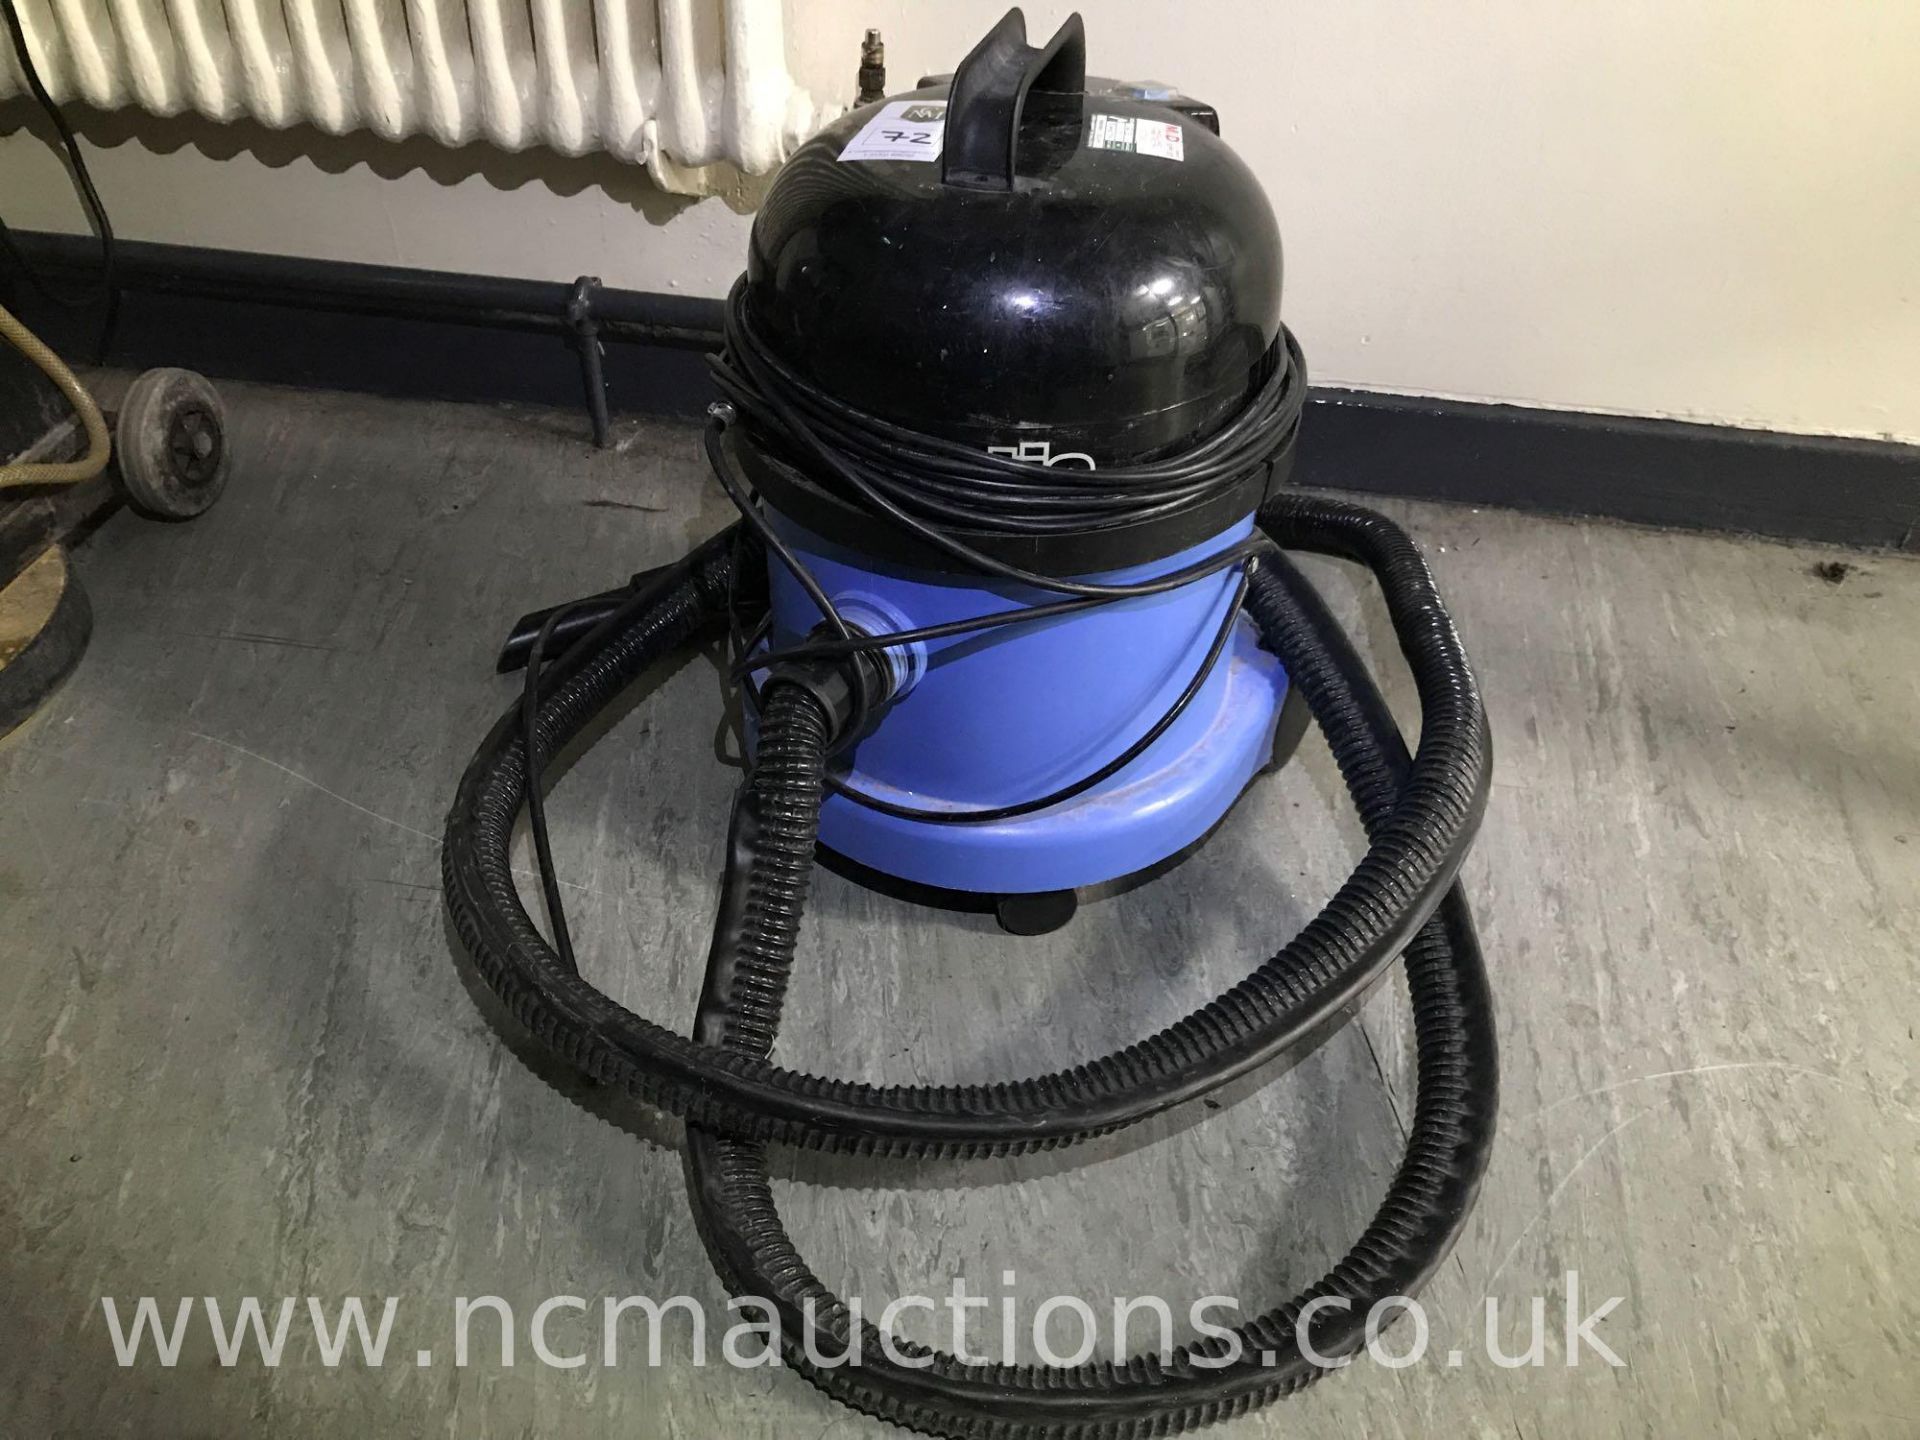 Numatic CT 370-2 wet and dry vacuum